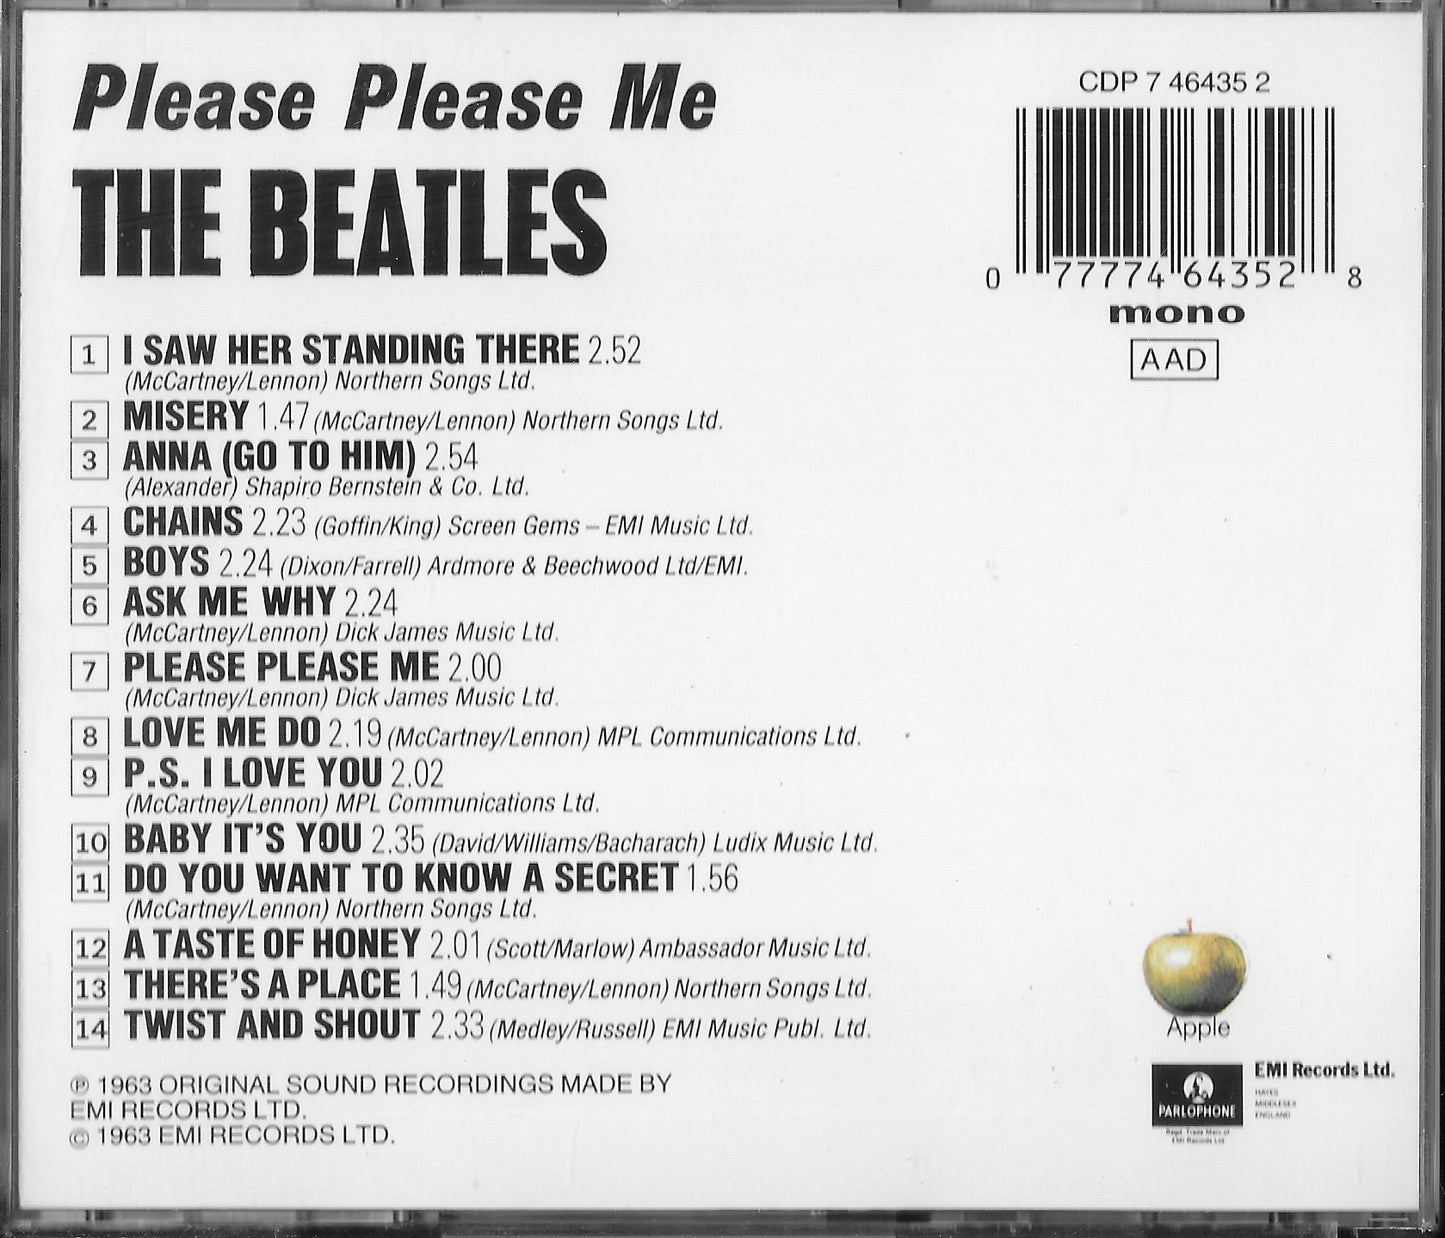 THE BEATLES - Please Please Me